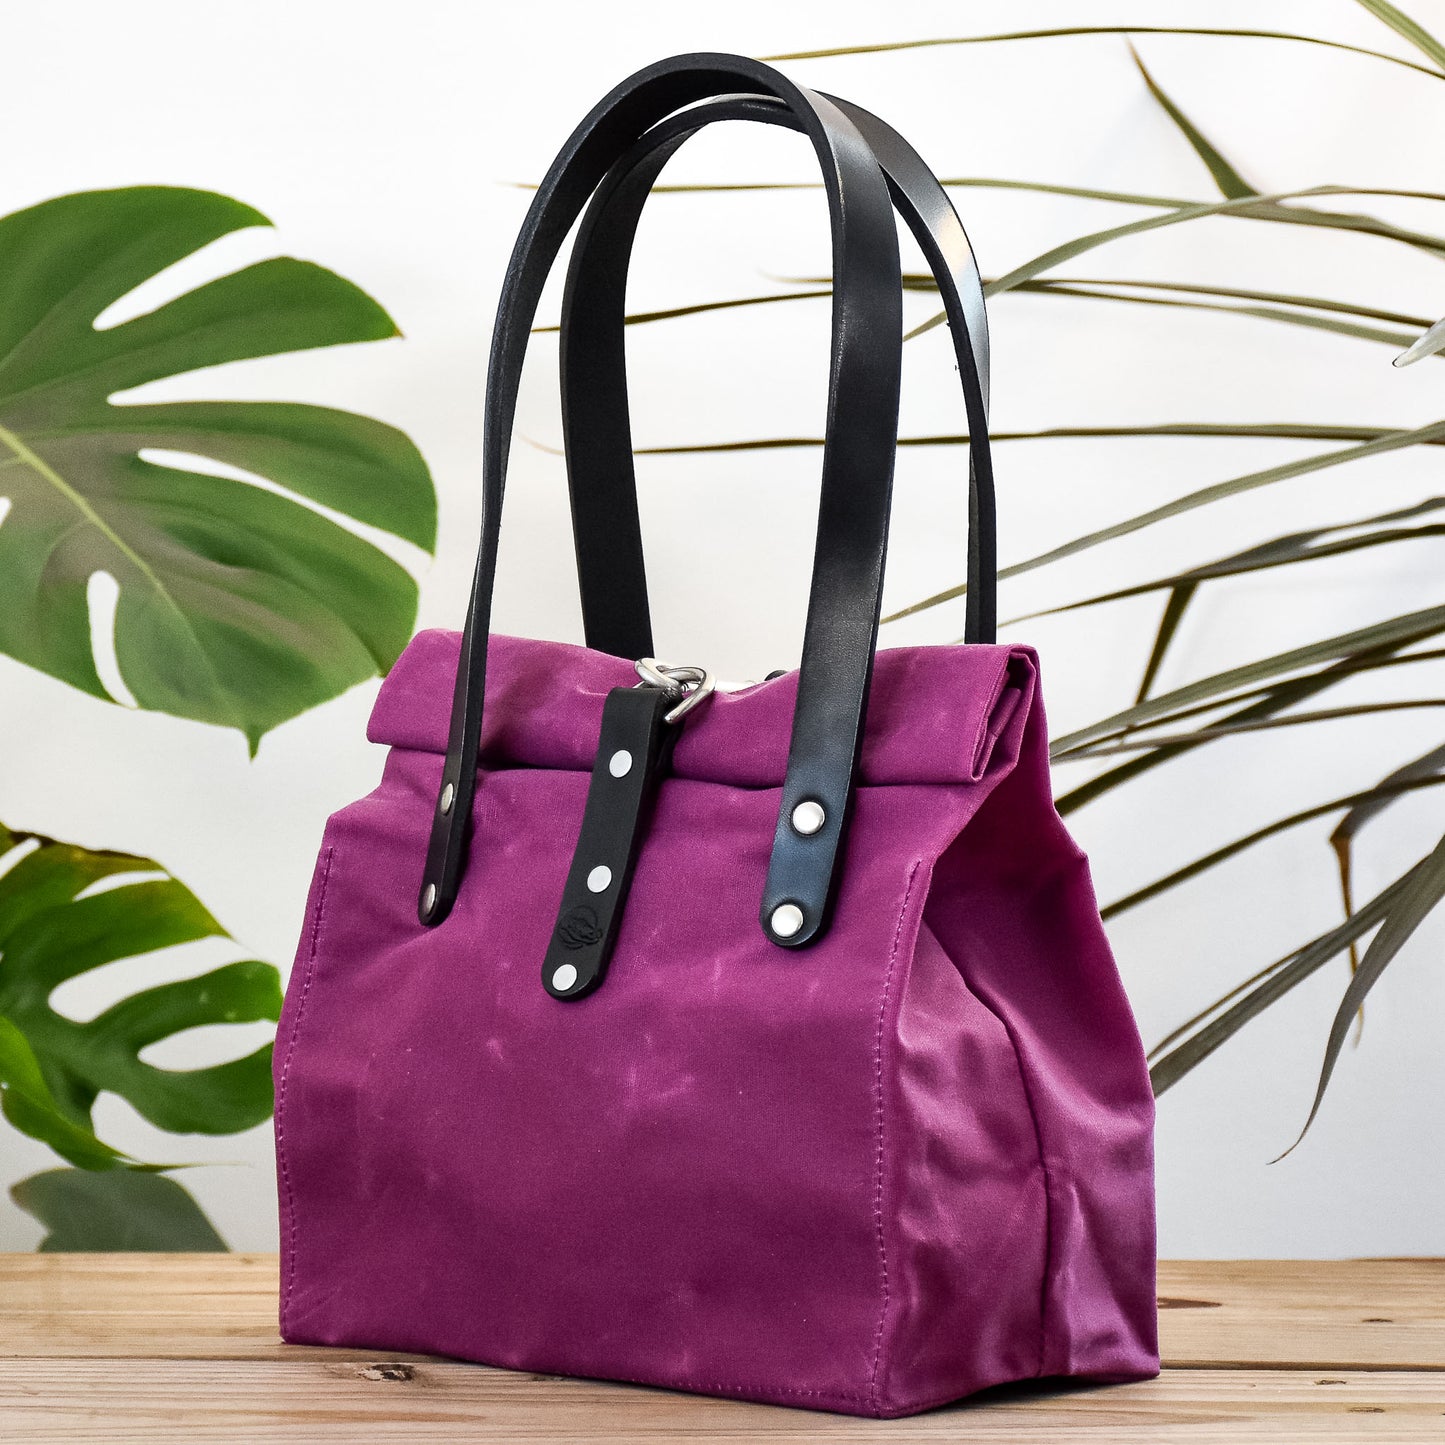 Deep Fuchsia Bag No. 2 - On the Go Bag